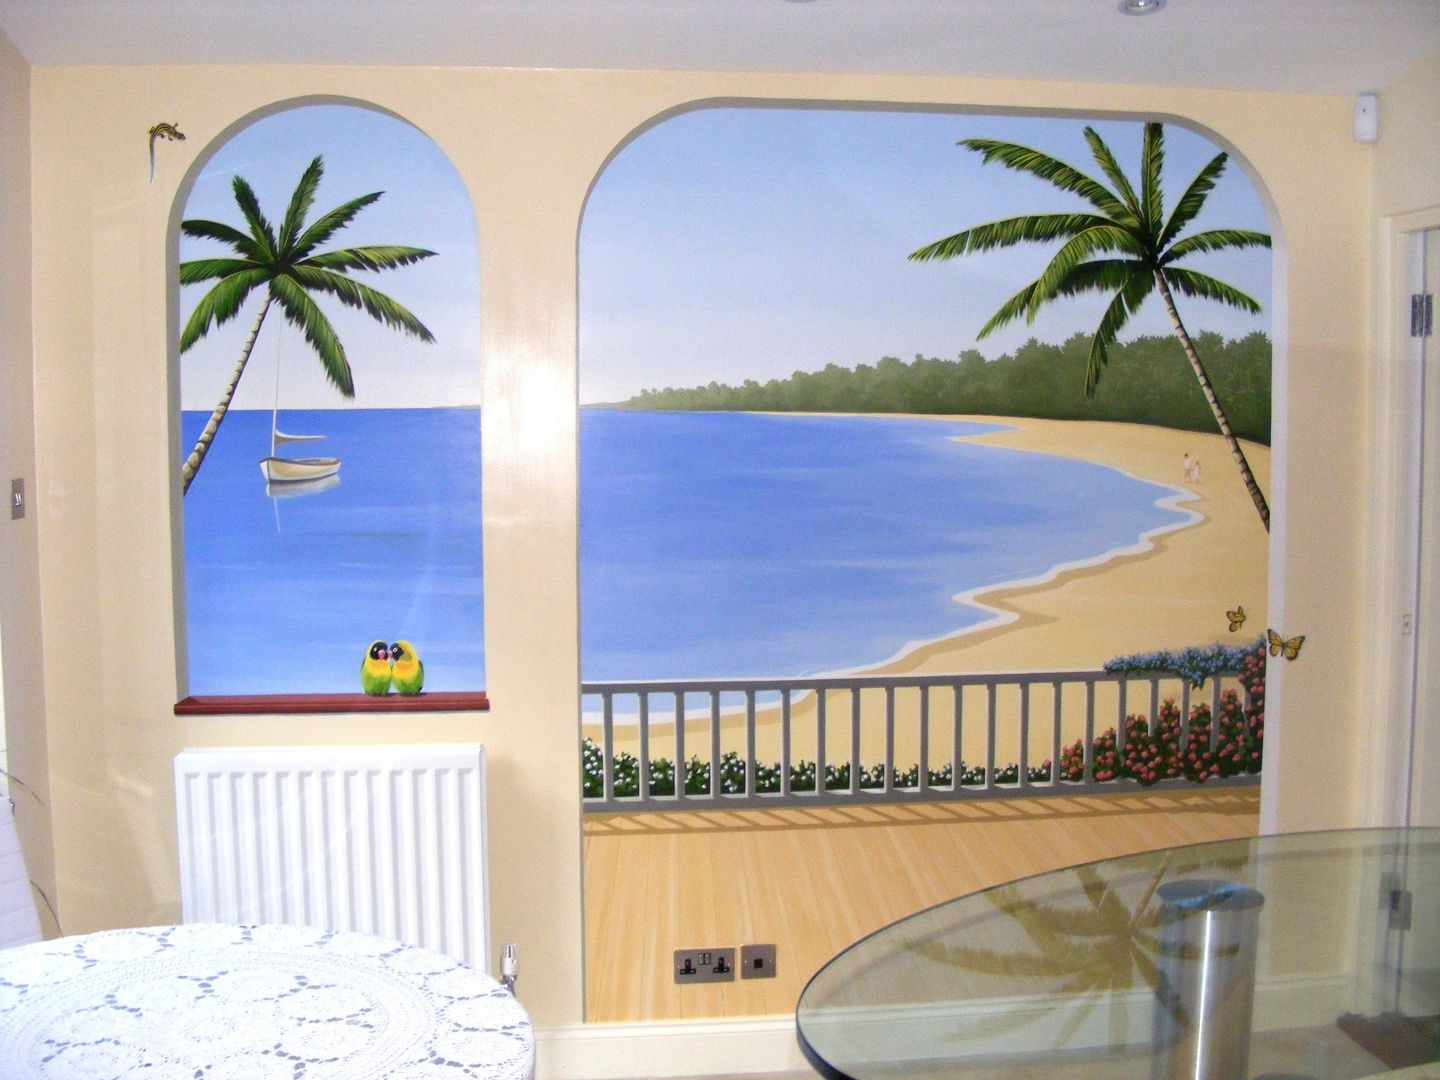 Tropical Paradise Mural Marvellous Murals Mediterranean style walls & floors